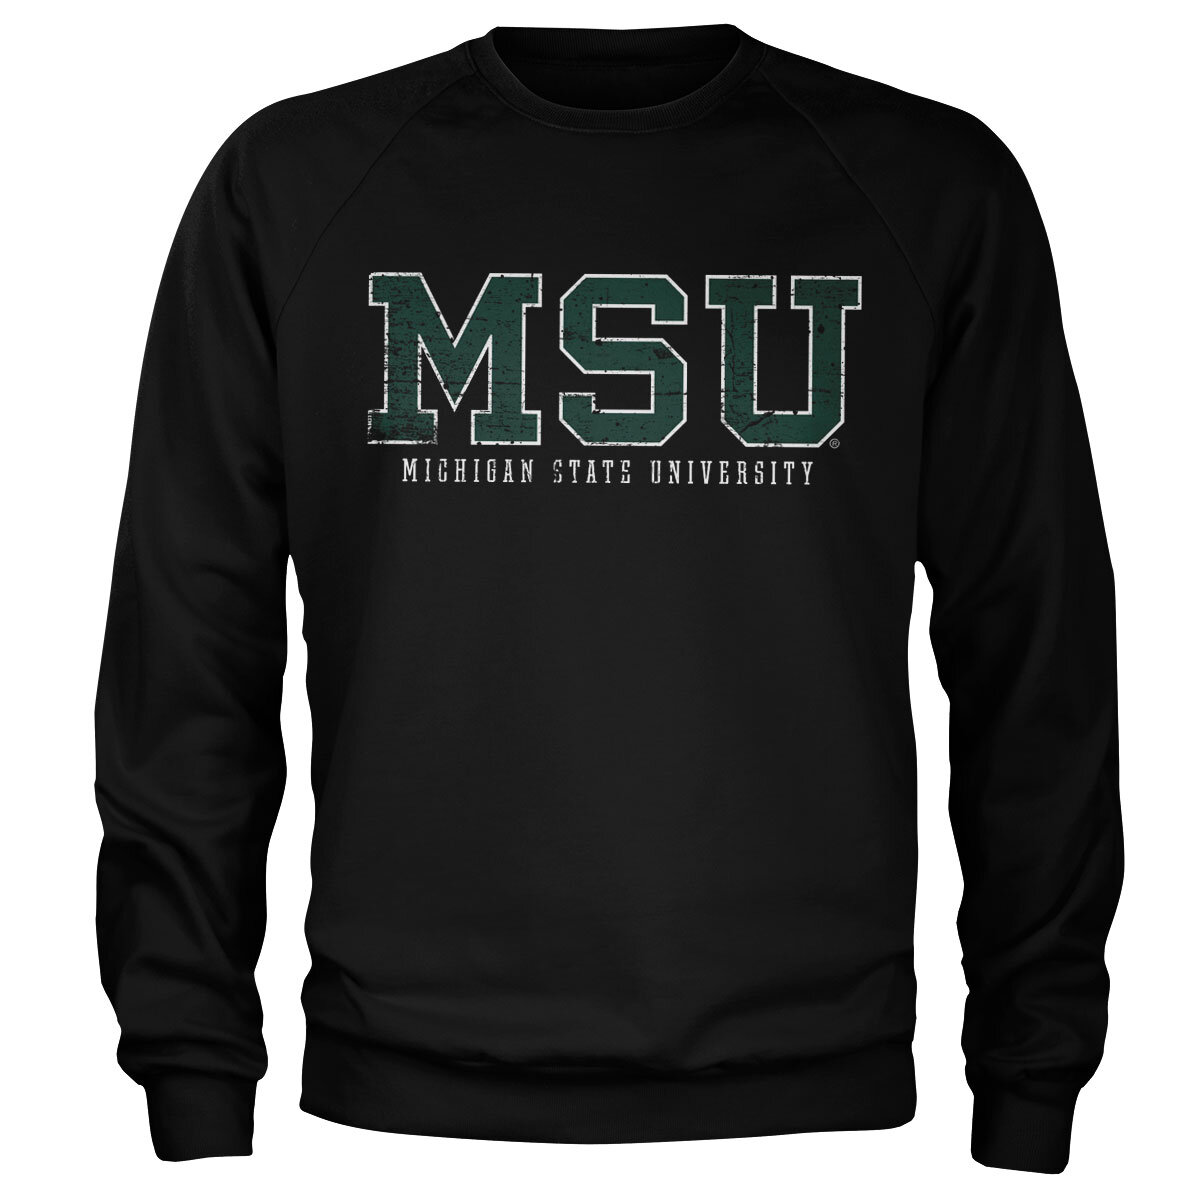 MSU - Michigan State University Sweatshirt